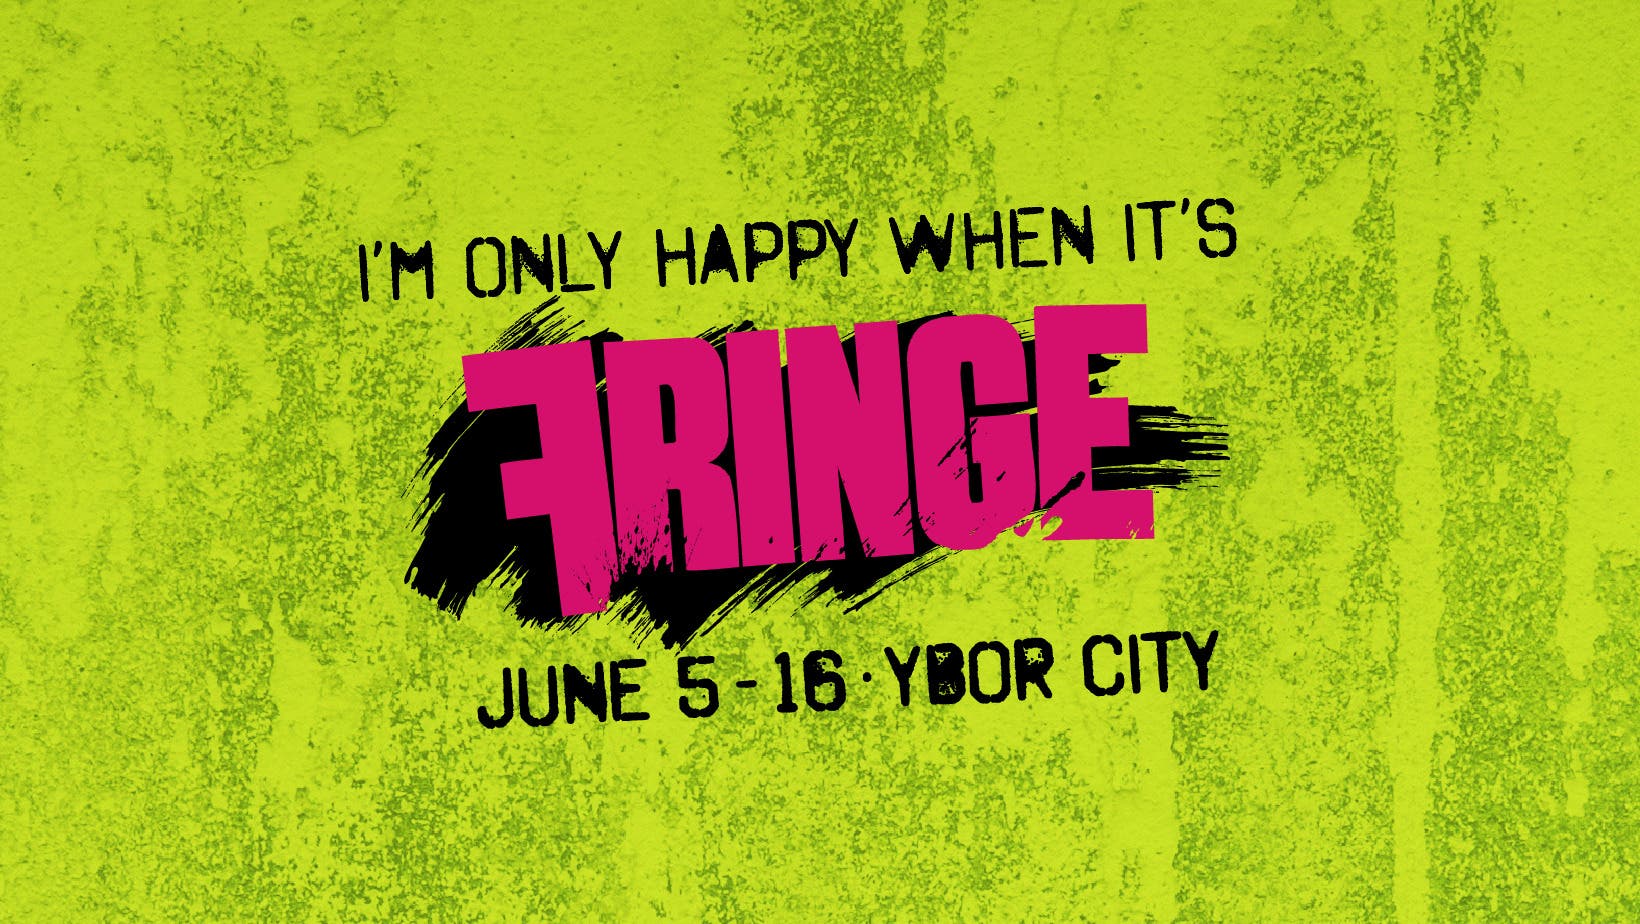 Tampa International Fringe Festival June 5-16